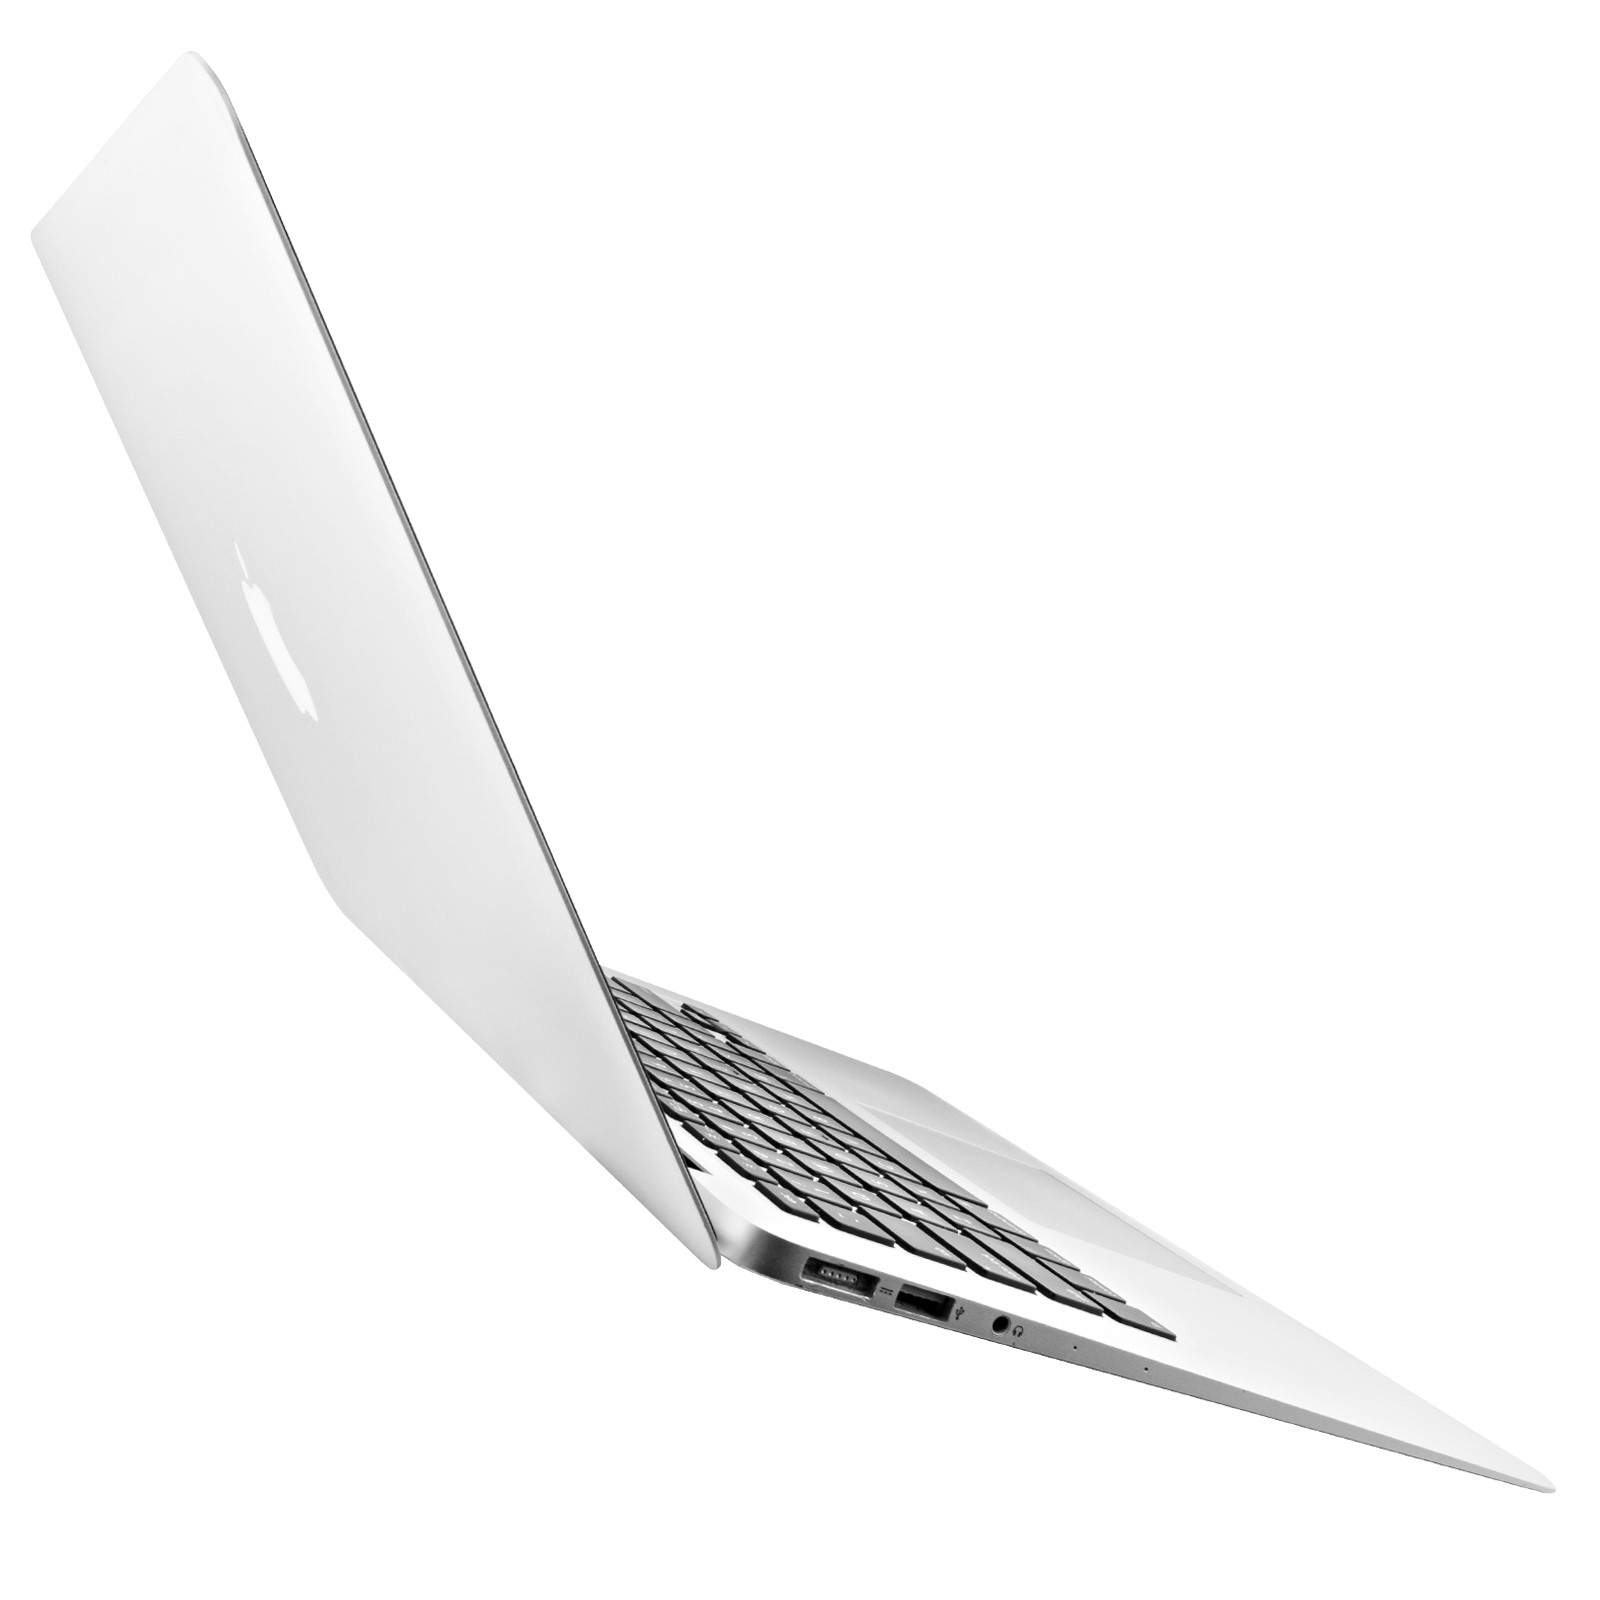 Restored Apple MacBook Air, 13.3" Laptop, Intel Core i5, 4GB RAM, 128GB SSD, Mac OS, Silver, MD760LL/A (Refurbished) - image 4 of 6